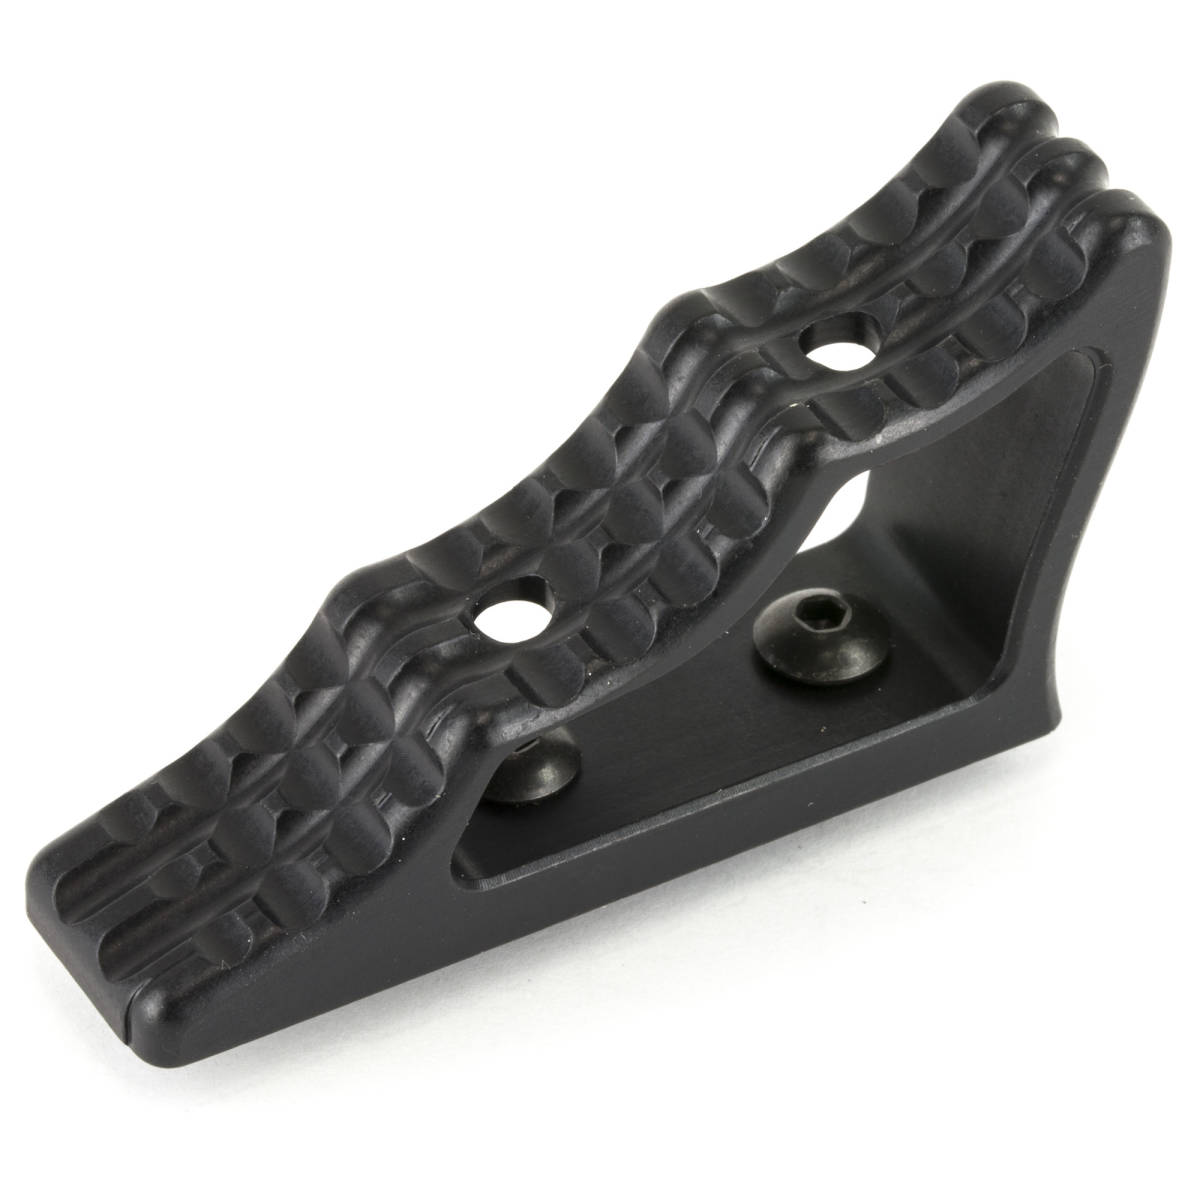 Ergo 4234 Angled Forward Grip Made of Aluminum With Black Finish for...-img-1